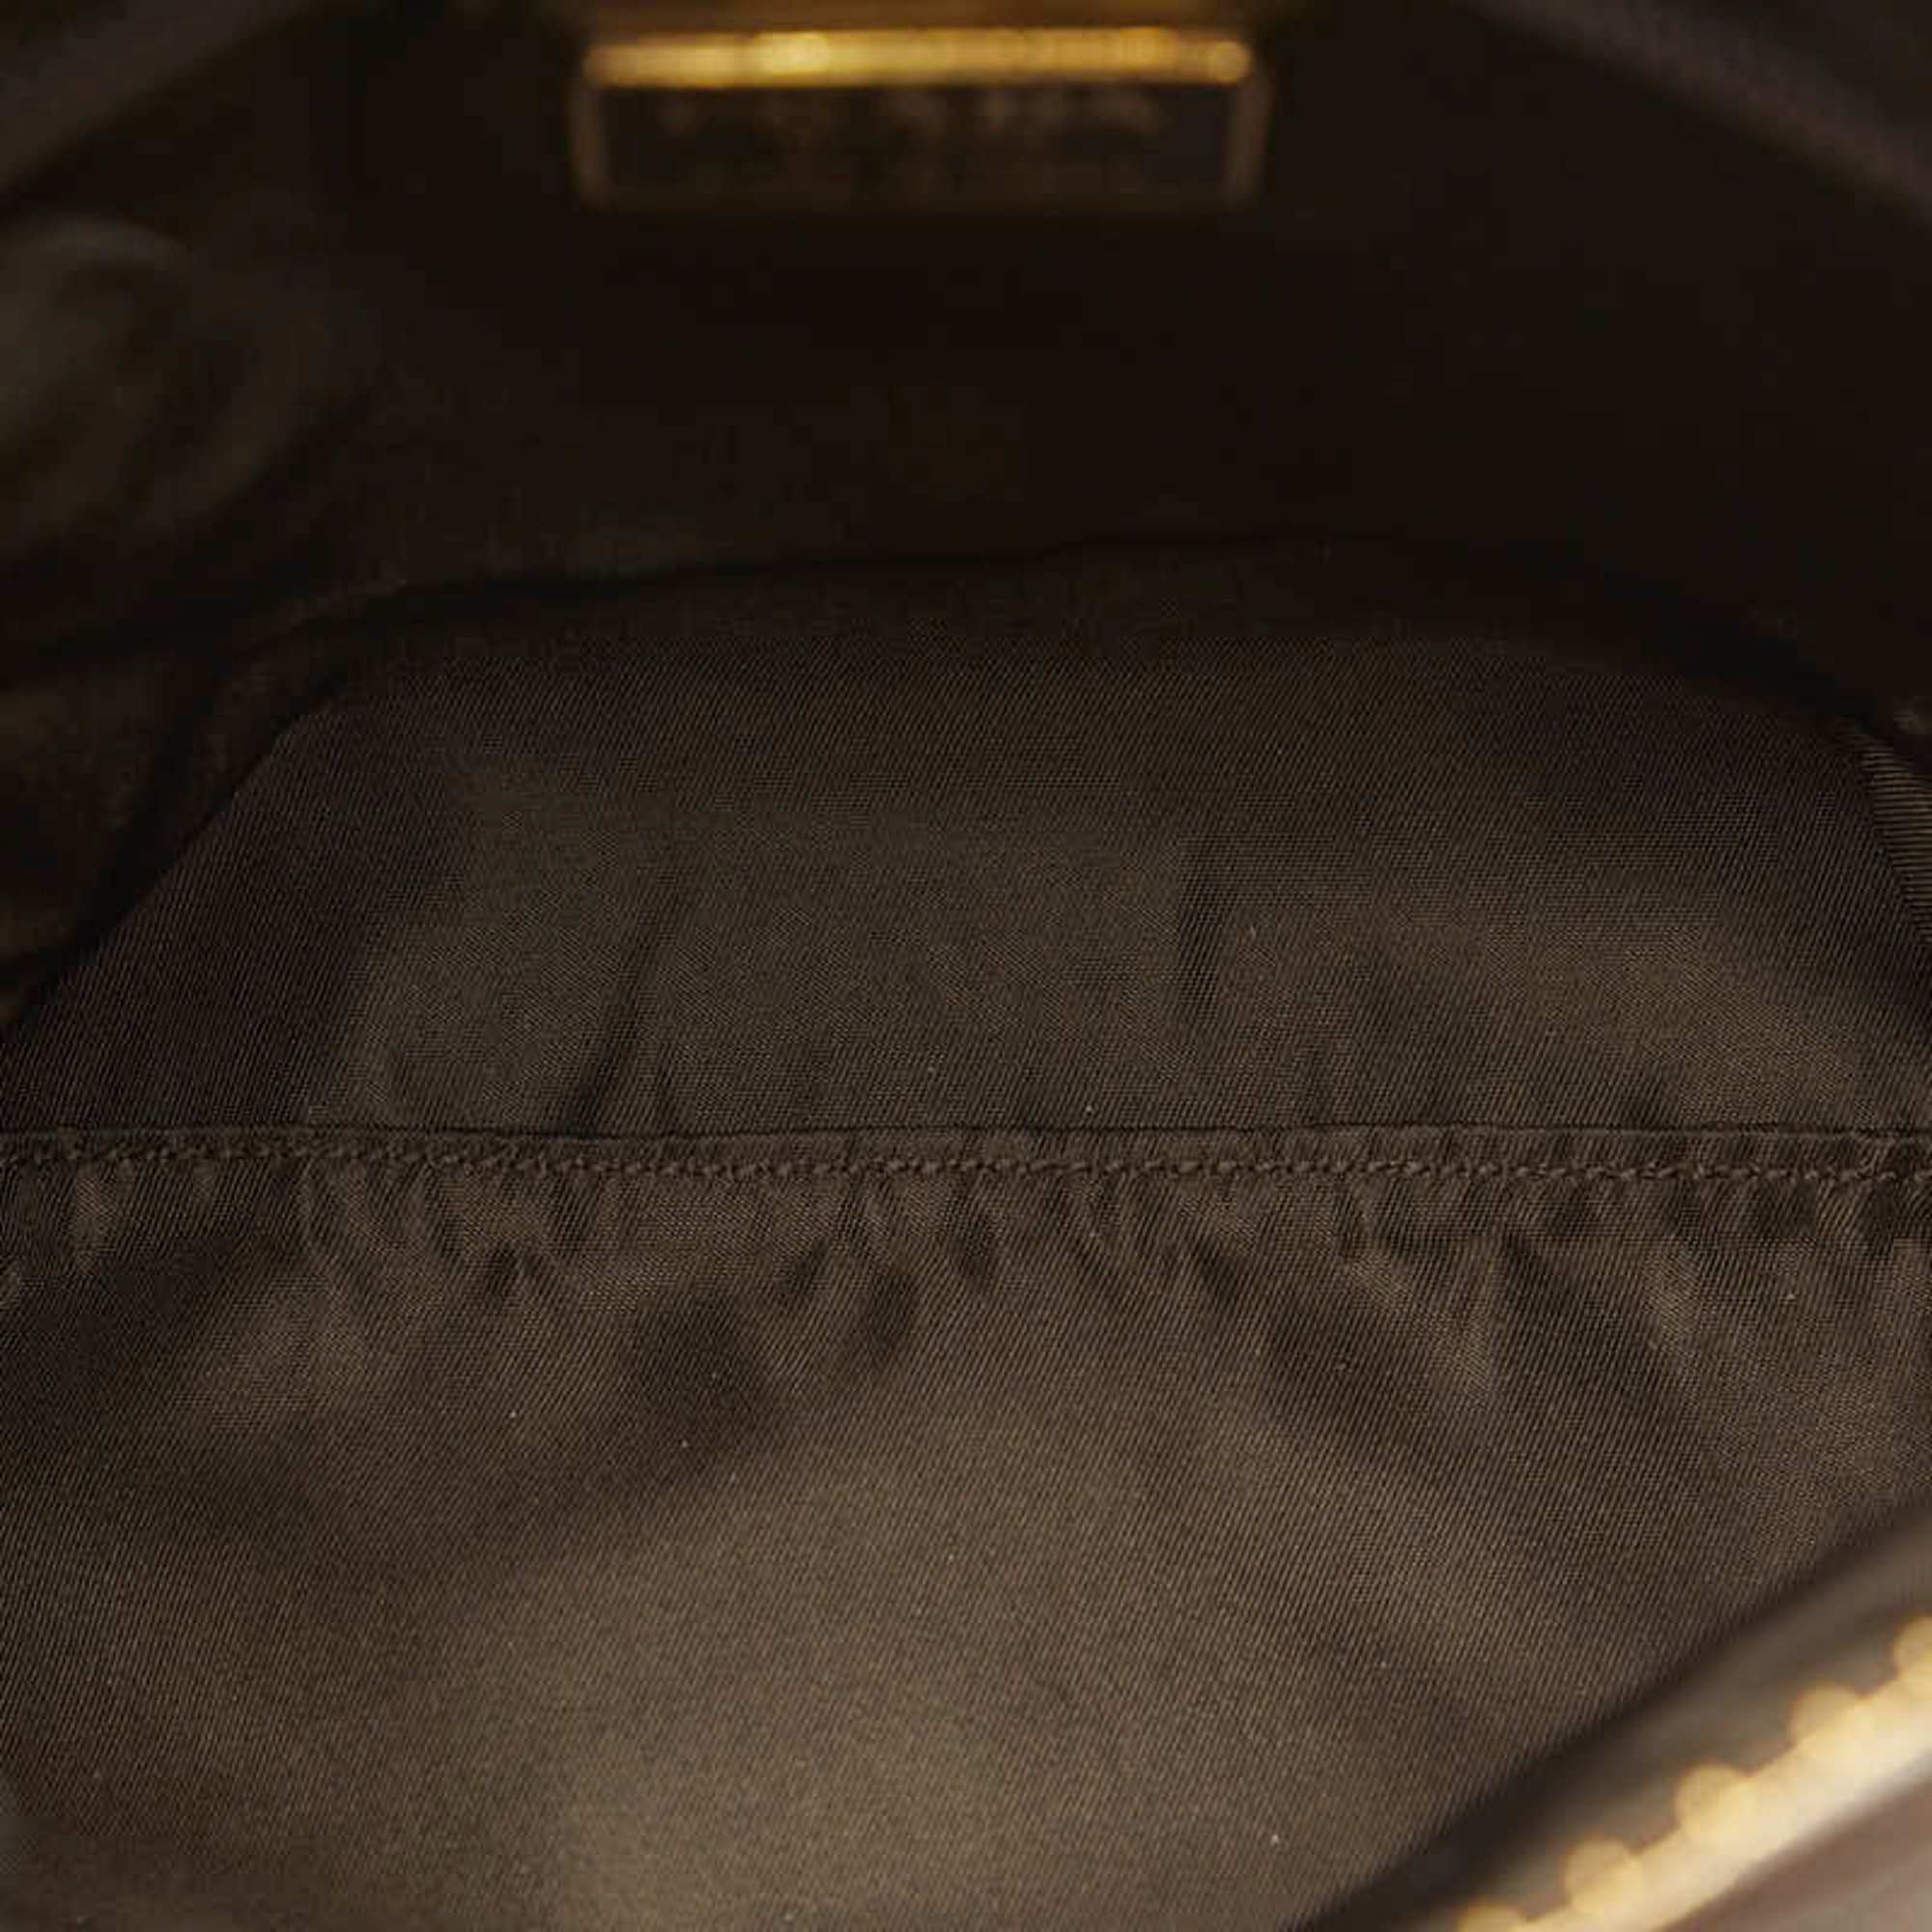 Prada Embroidered Handbag Tote Bag Brown Gold Satin Nylon Women's PRADA